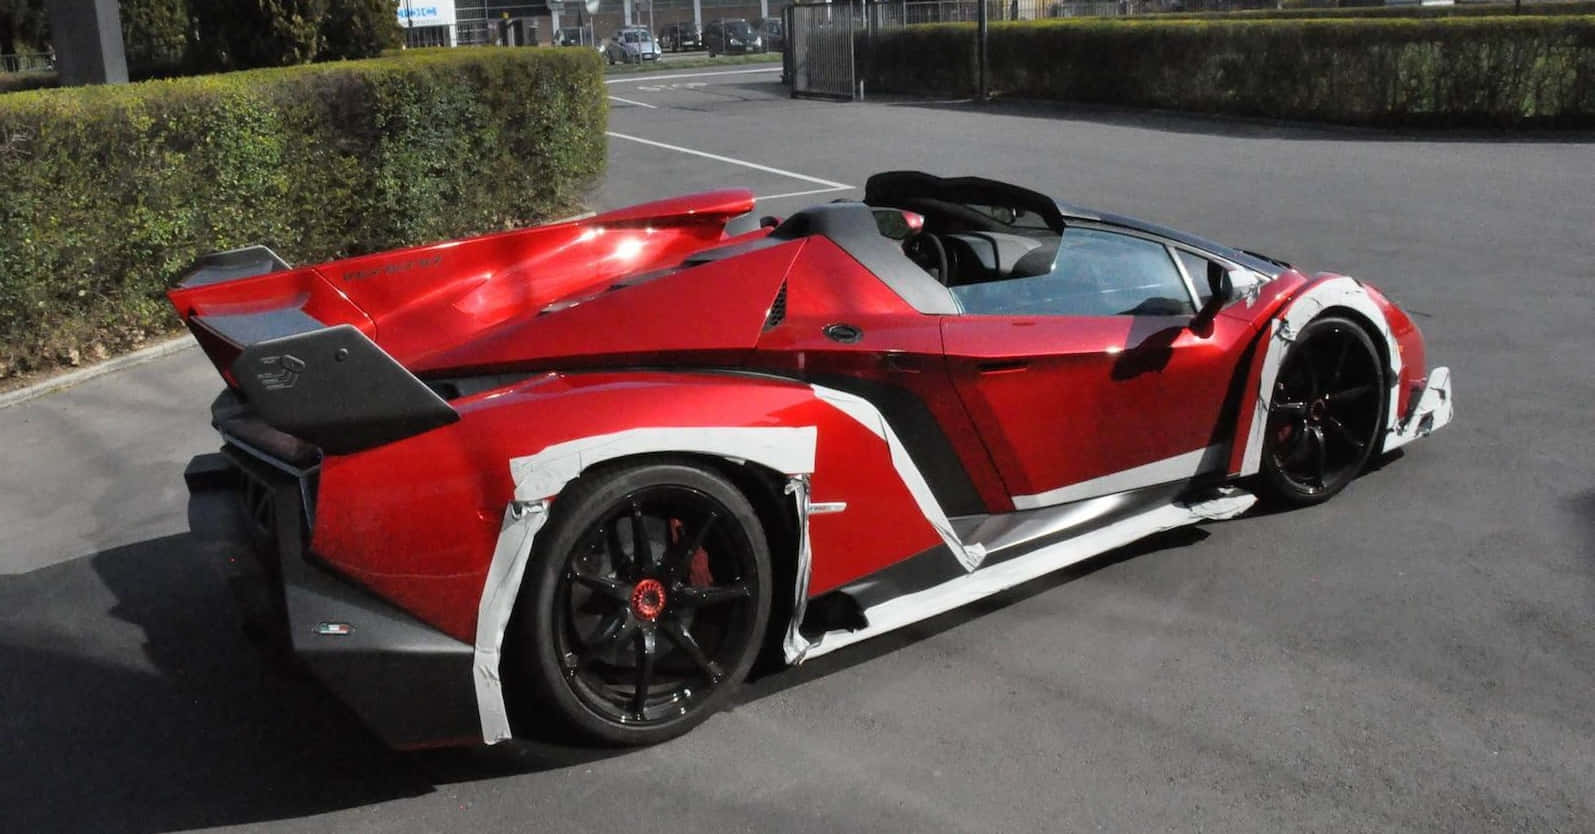 #Lamborghini Veneno: The Stunning Hypercar Wallpaper